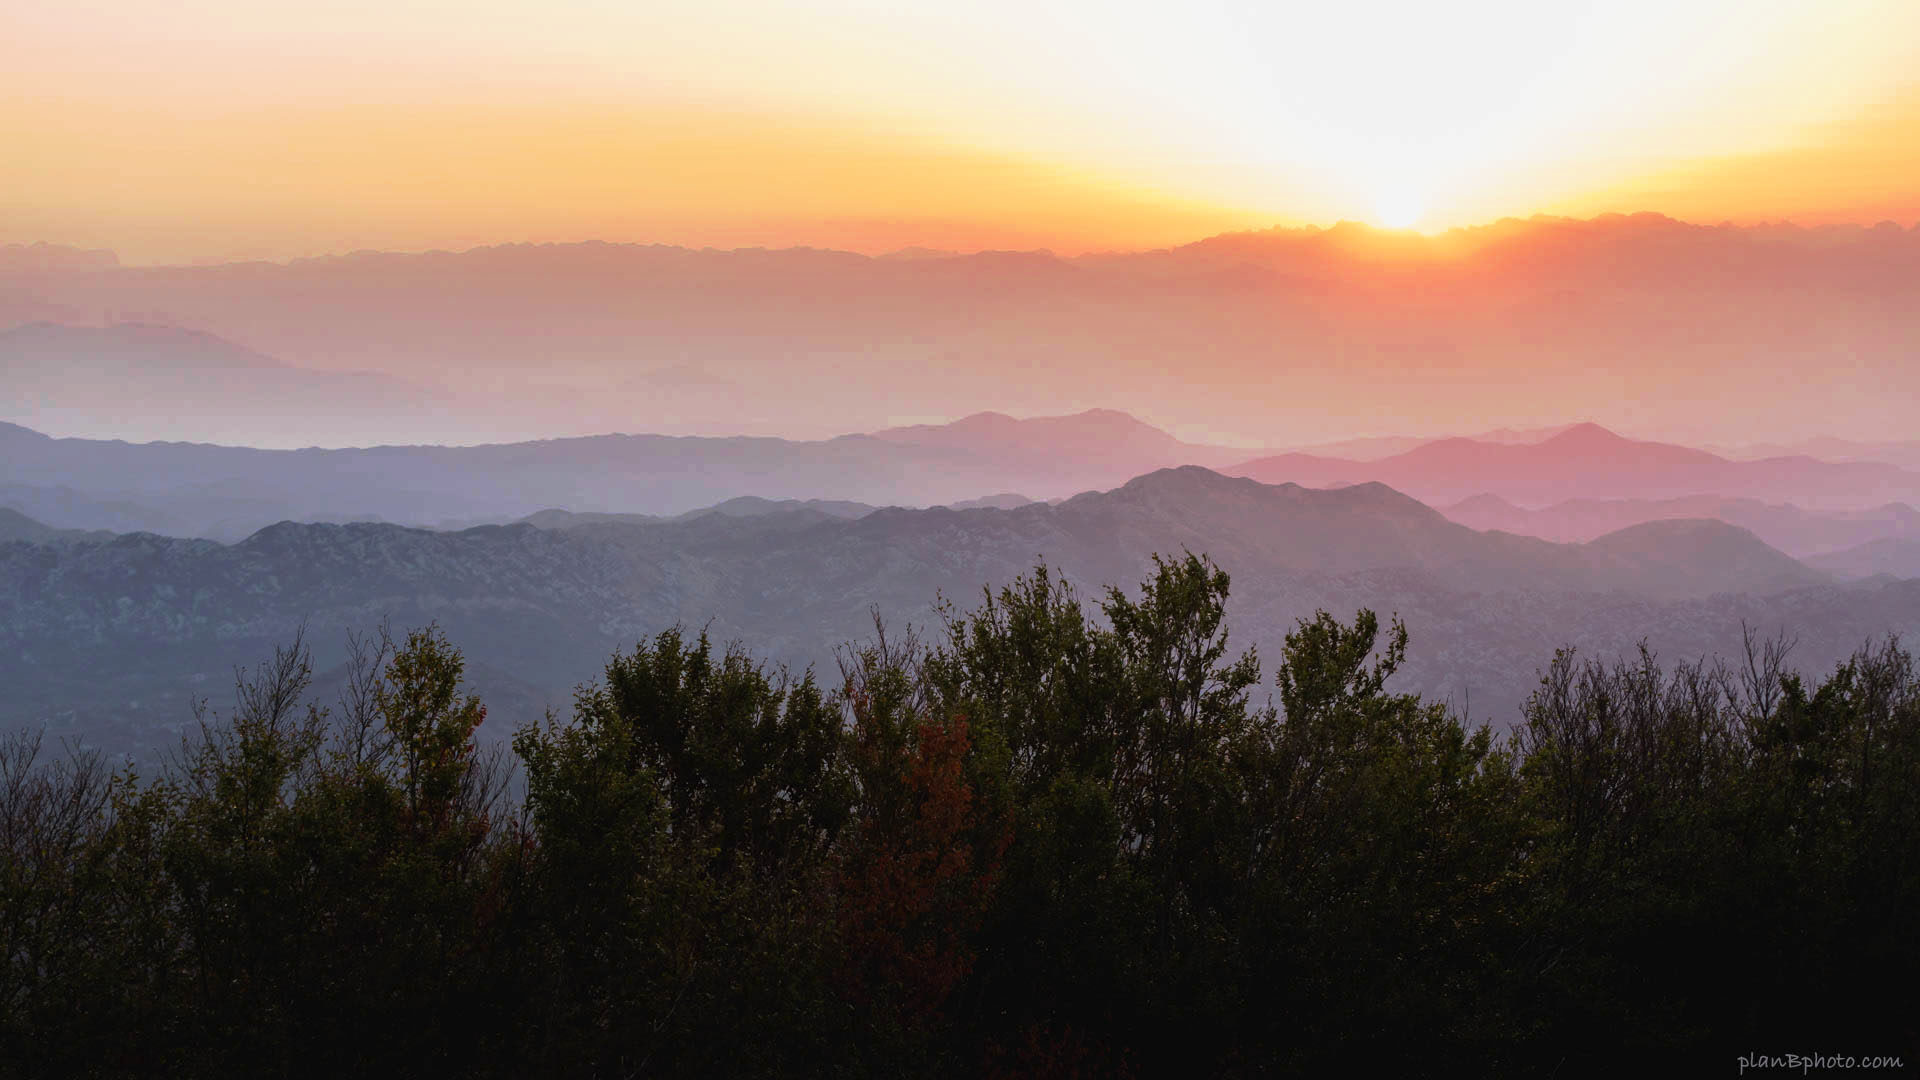 Colourful sunrise image with foggy mountains